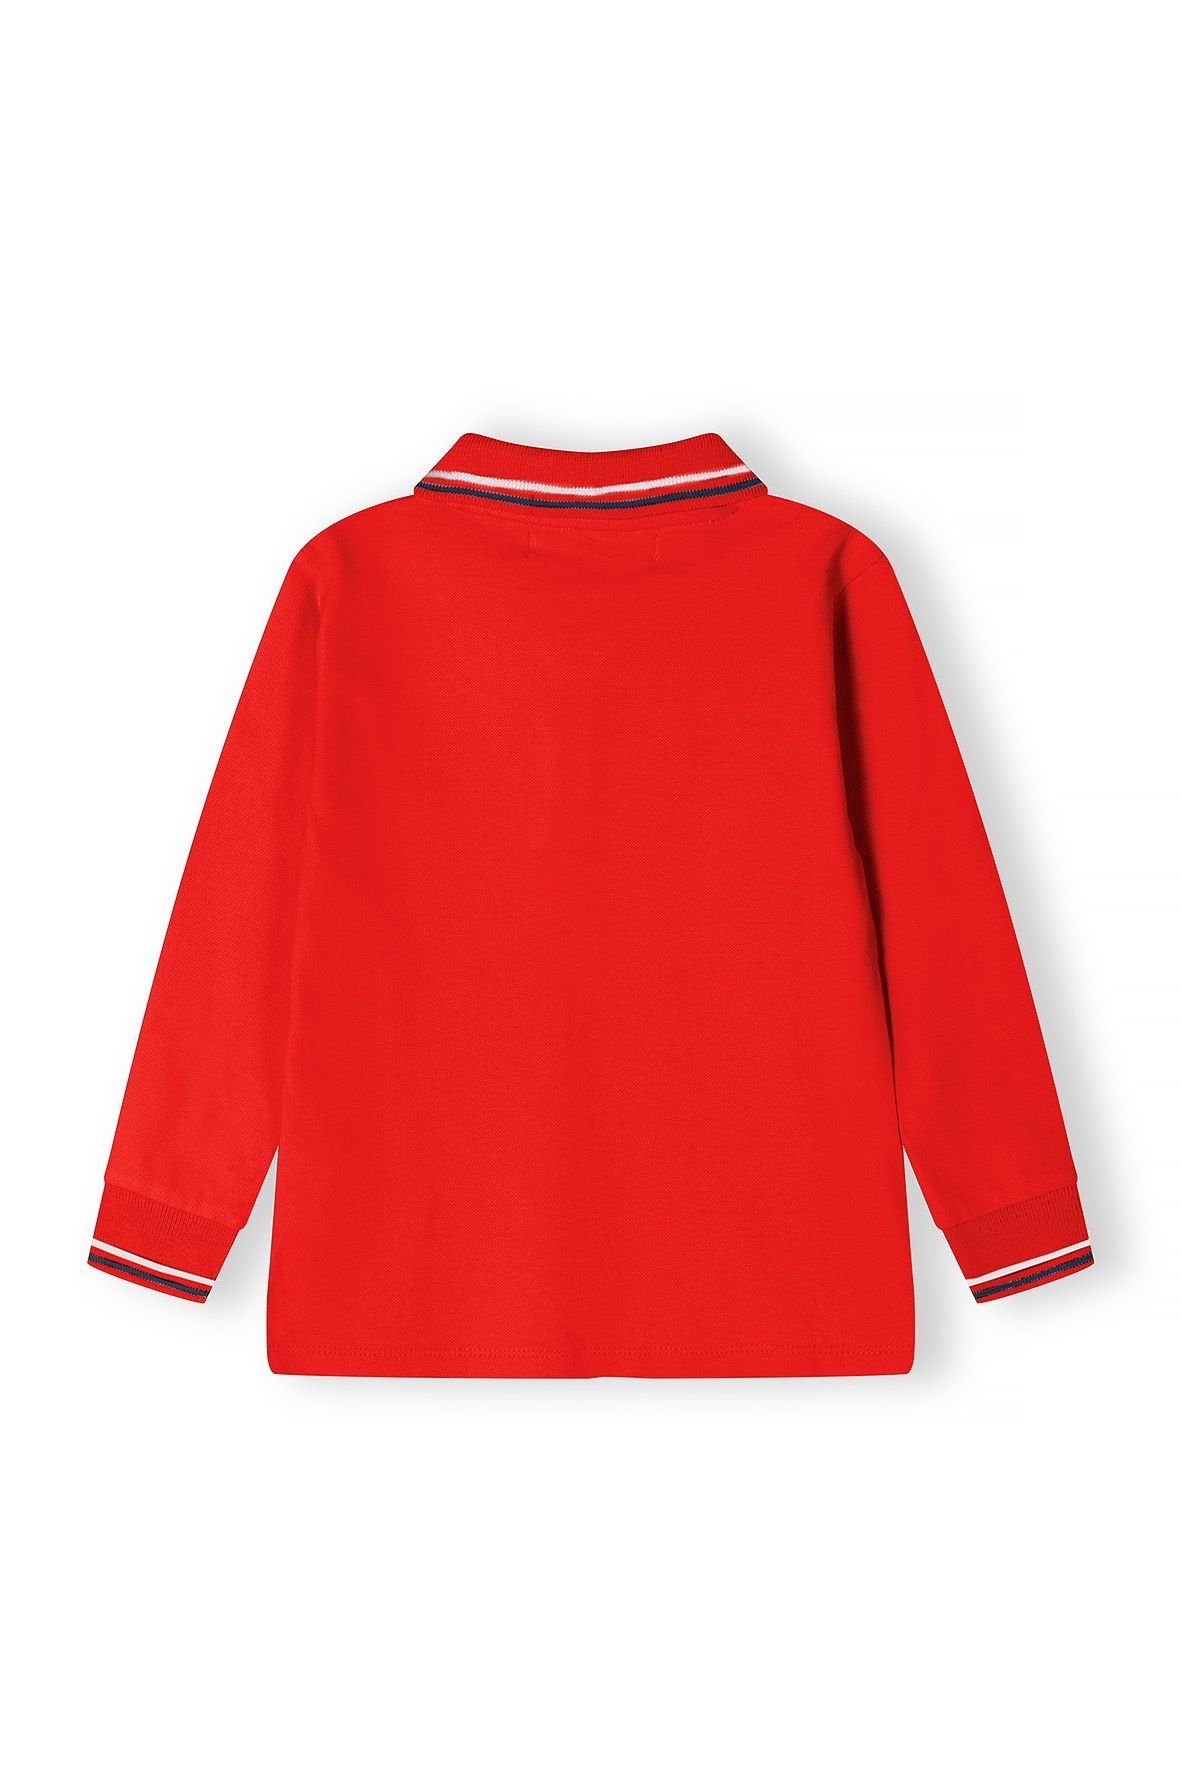 (12m-14y) MINOTI Langärmlig Rot Poloshirt